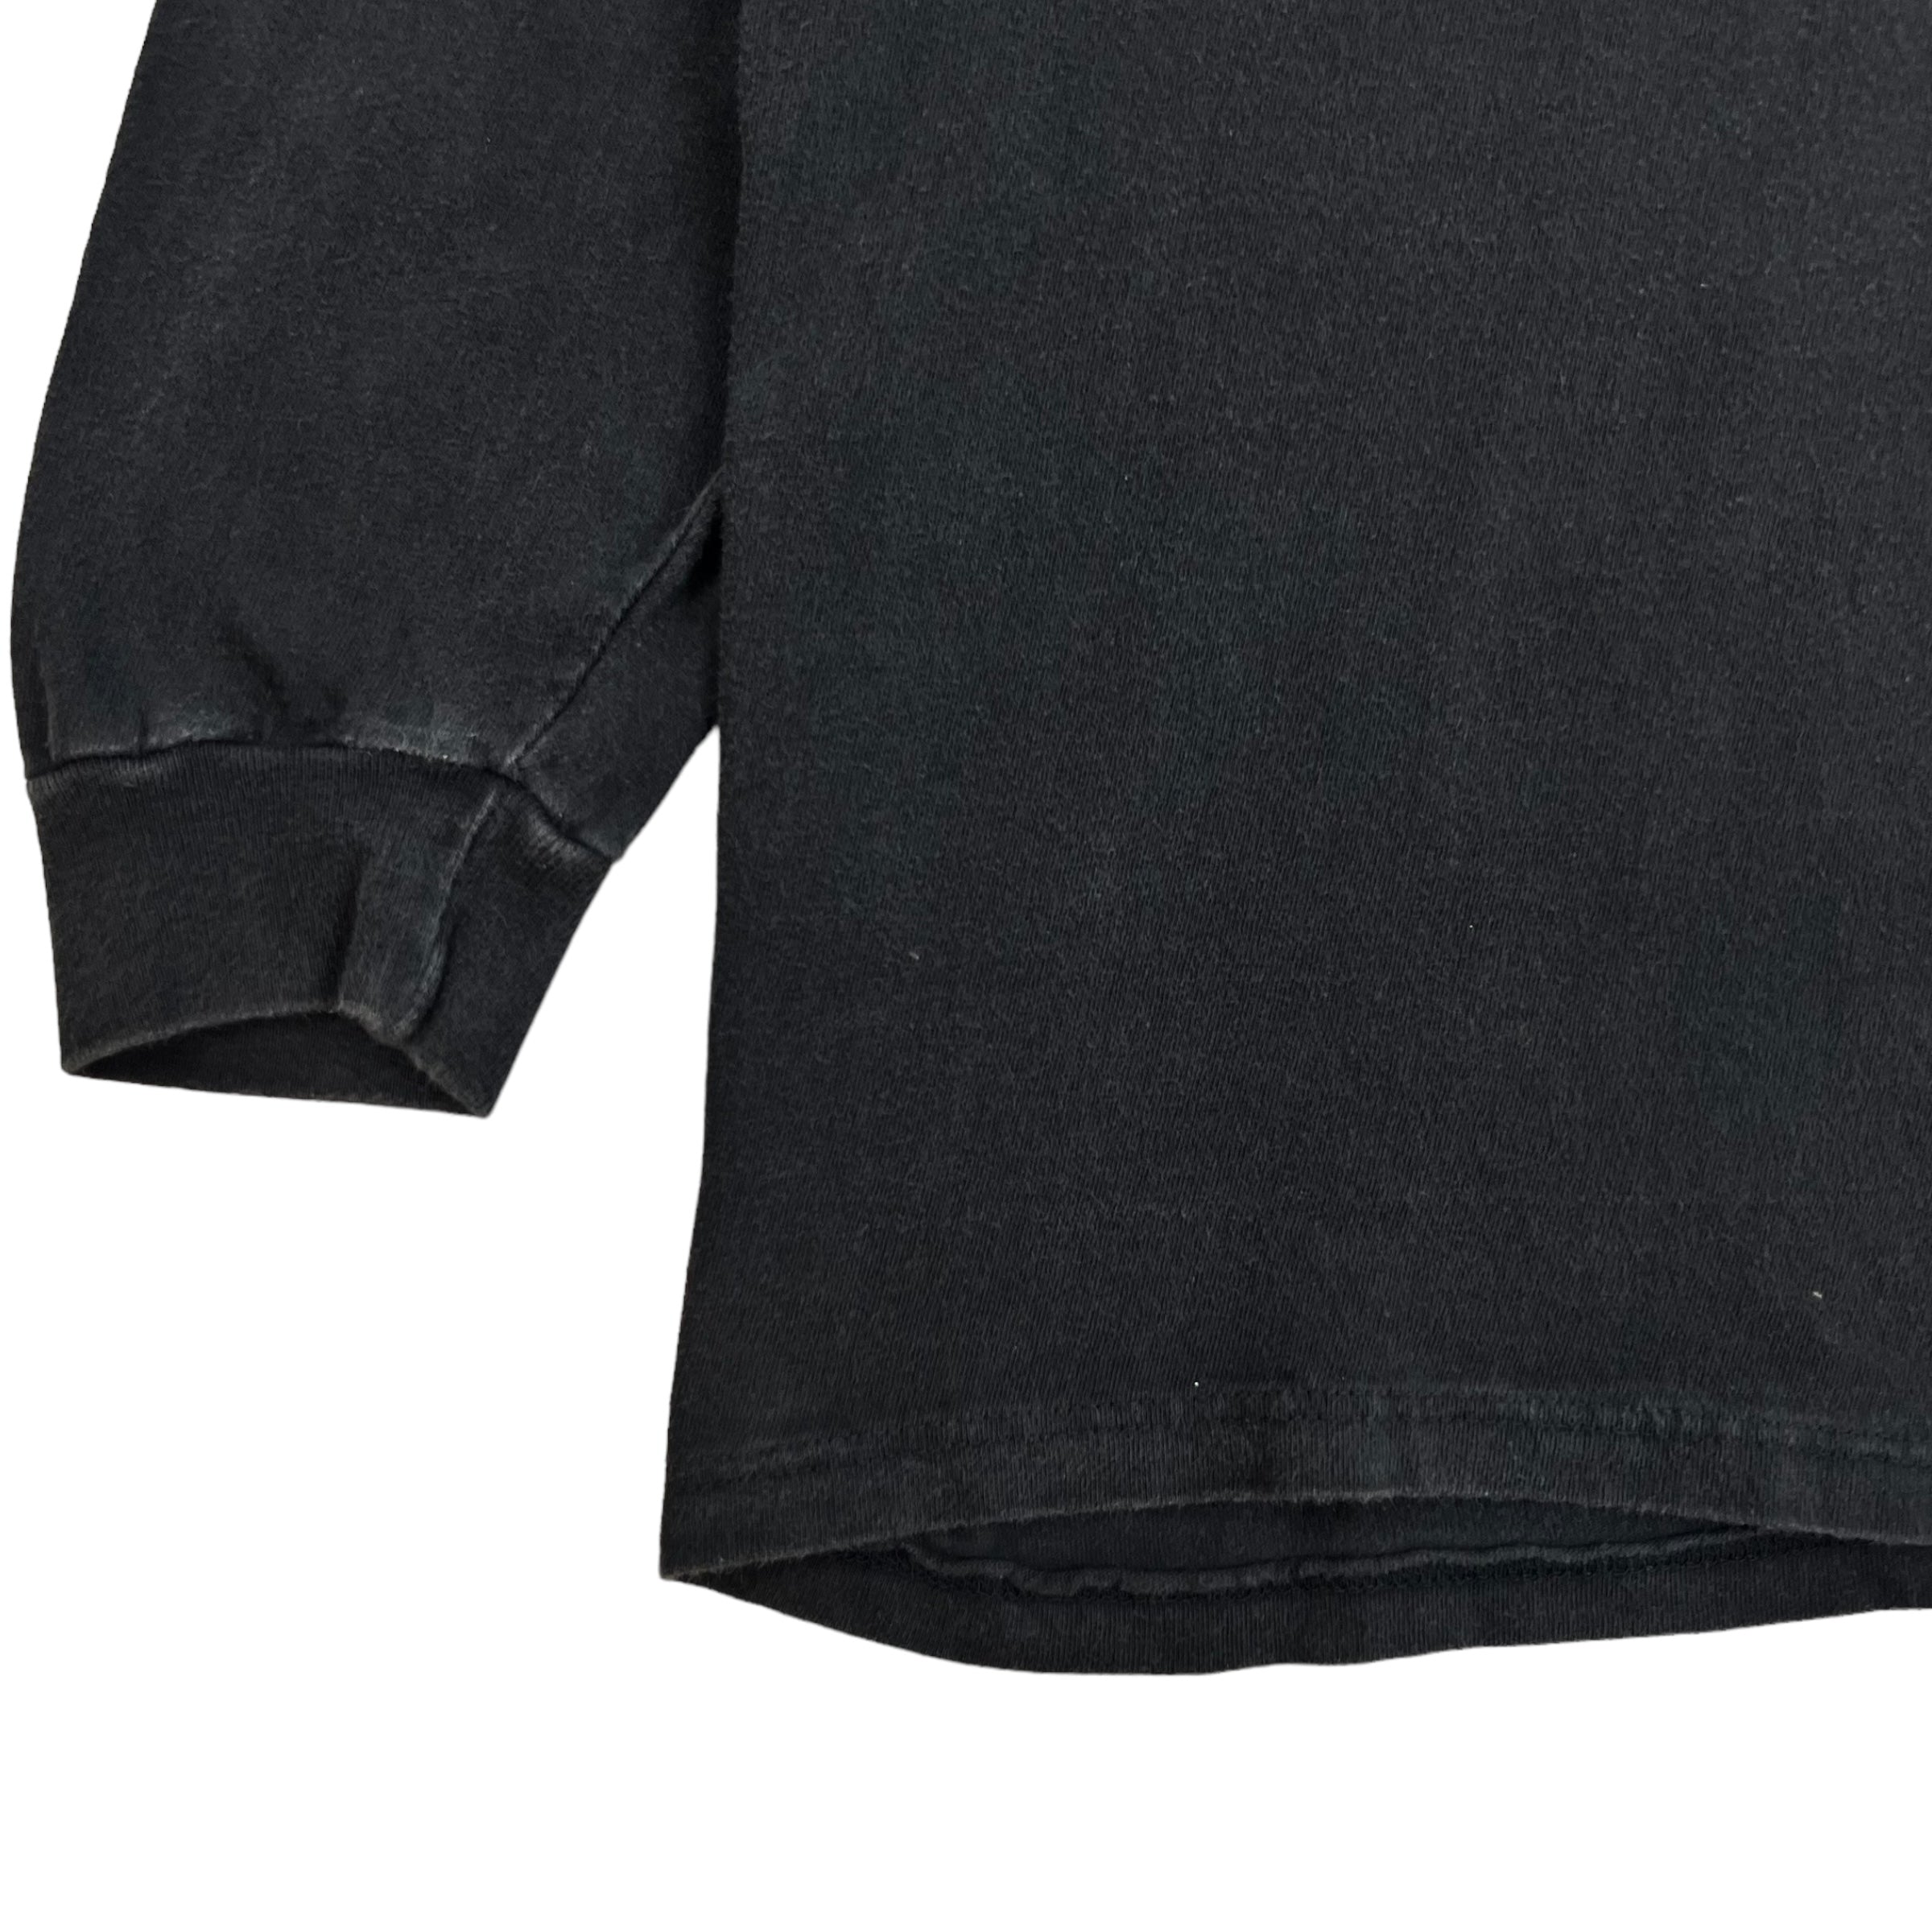 Vintage Public Enemy Black Apocalypse 91 Longsleeve Shirt